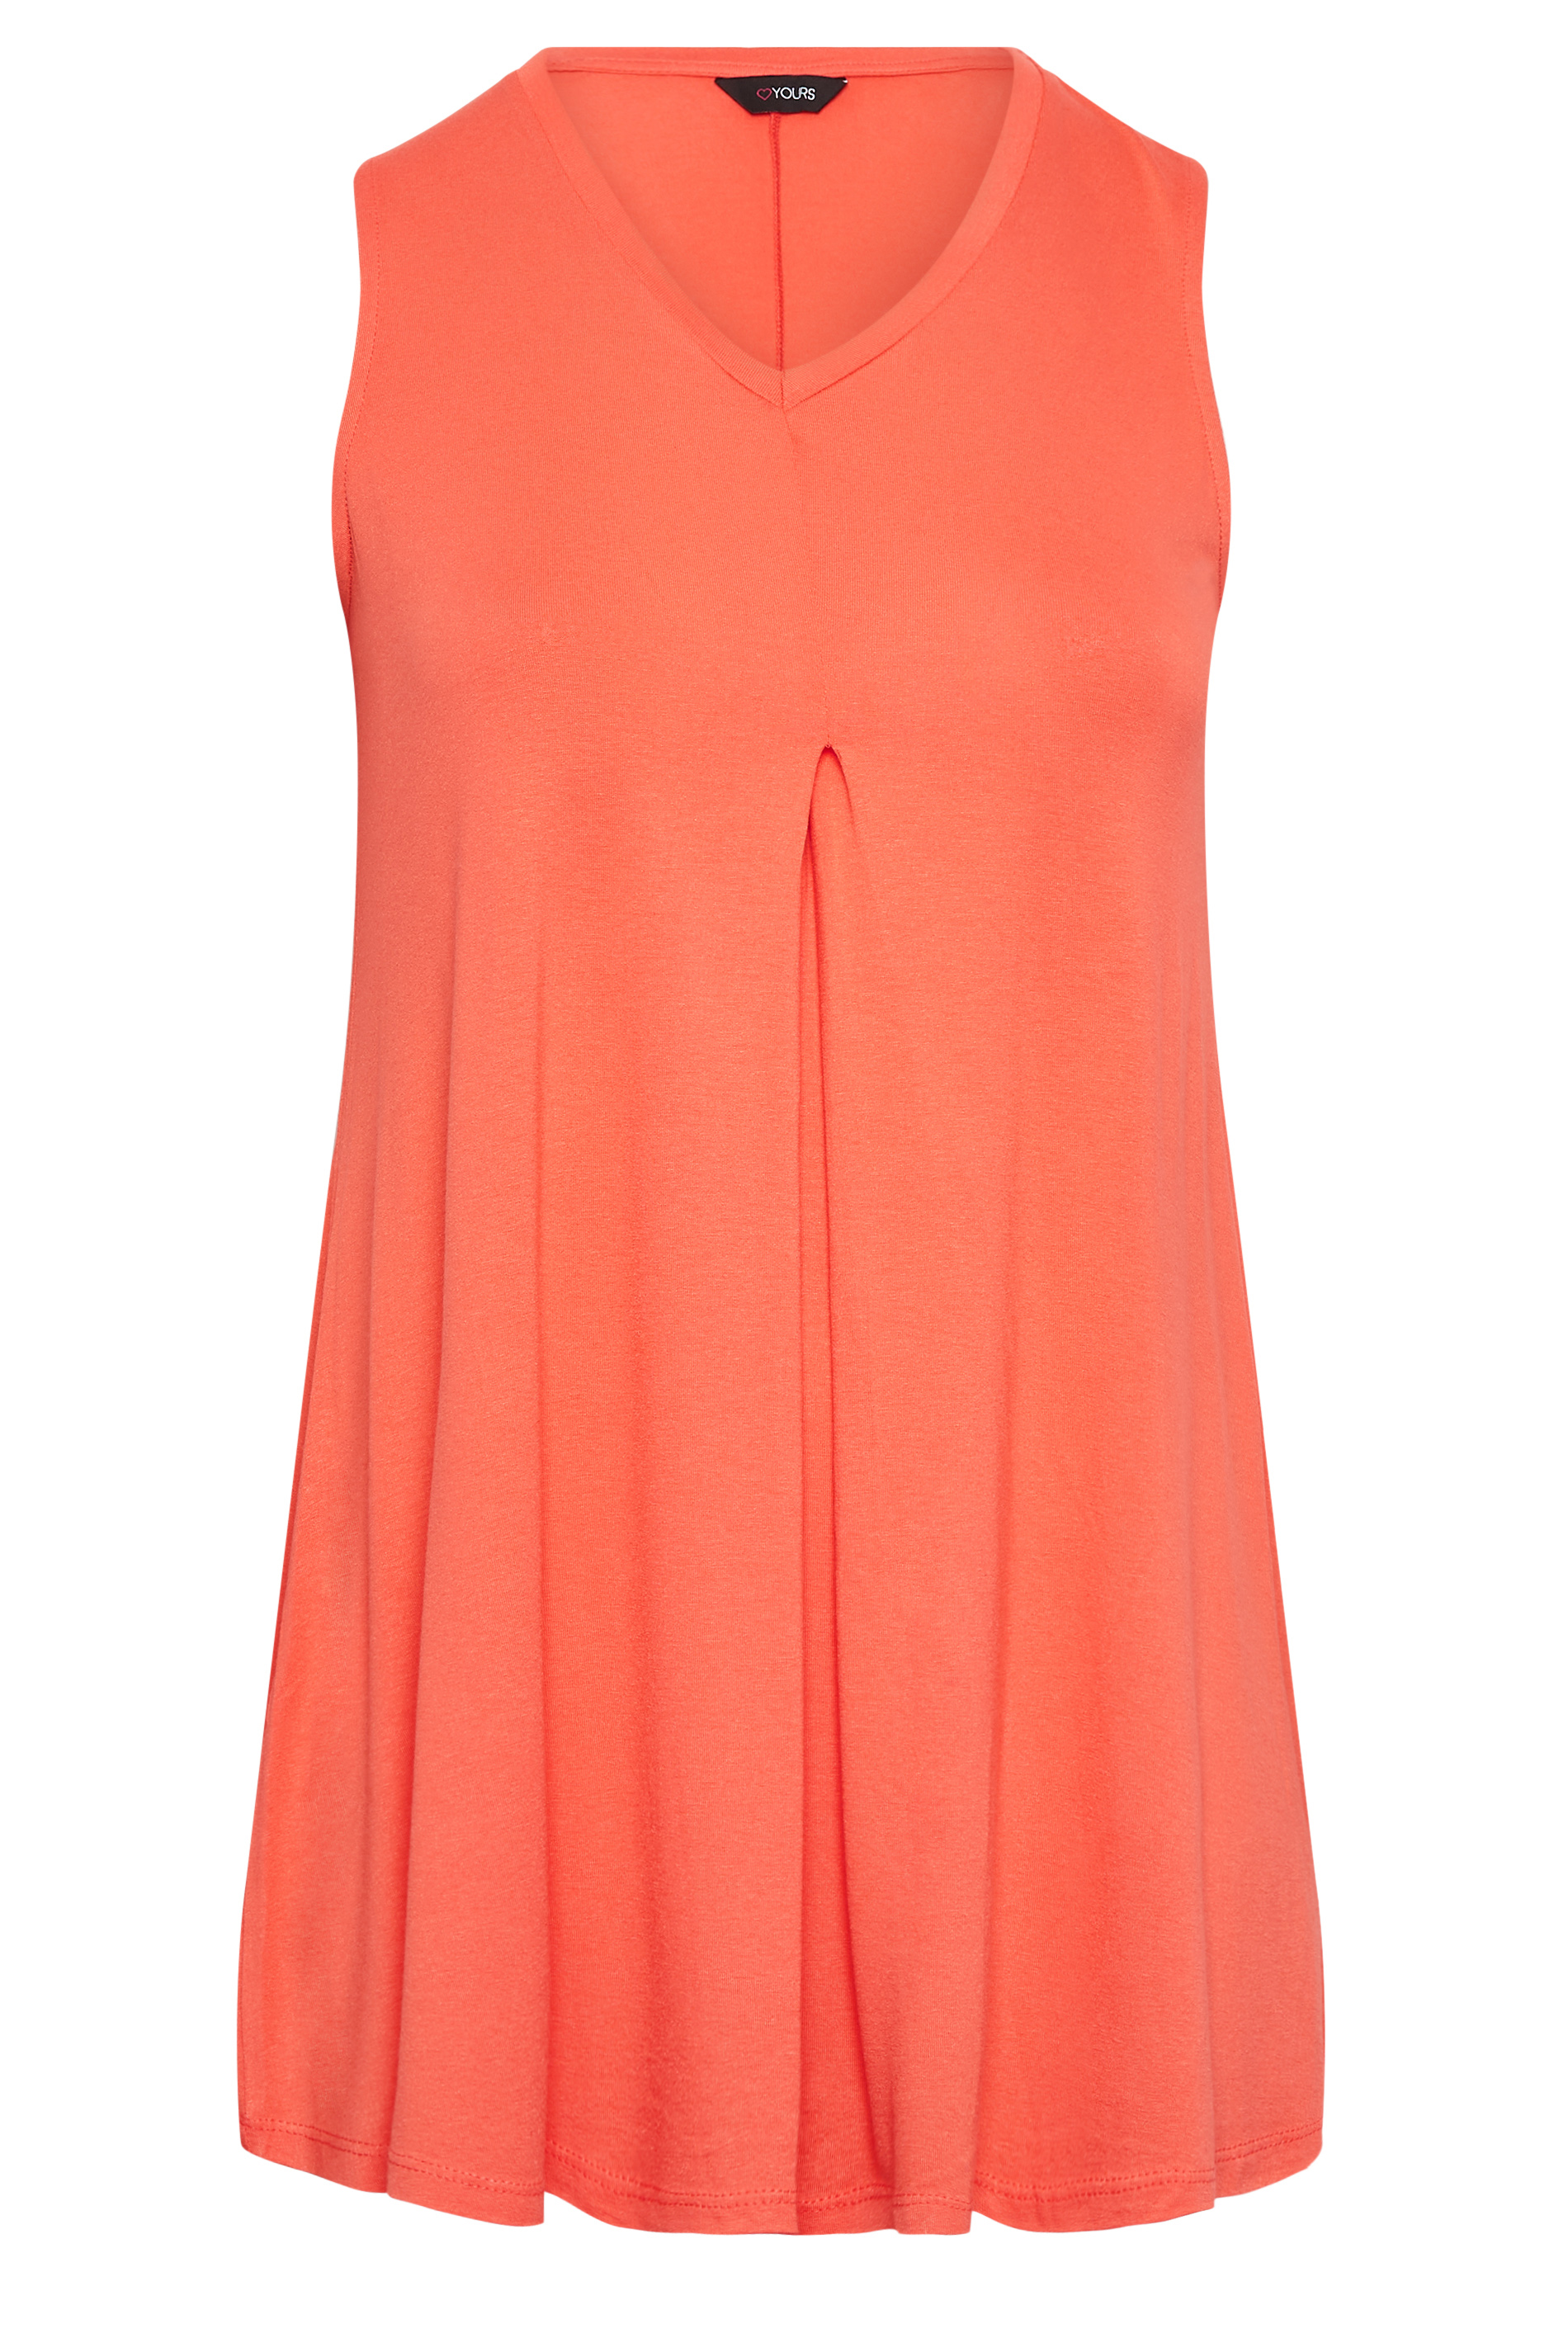 YOURS Curve Plus Size Orange Pleat Swing Vest Top | Yours Clothing